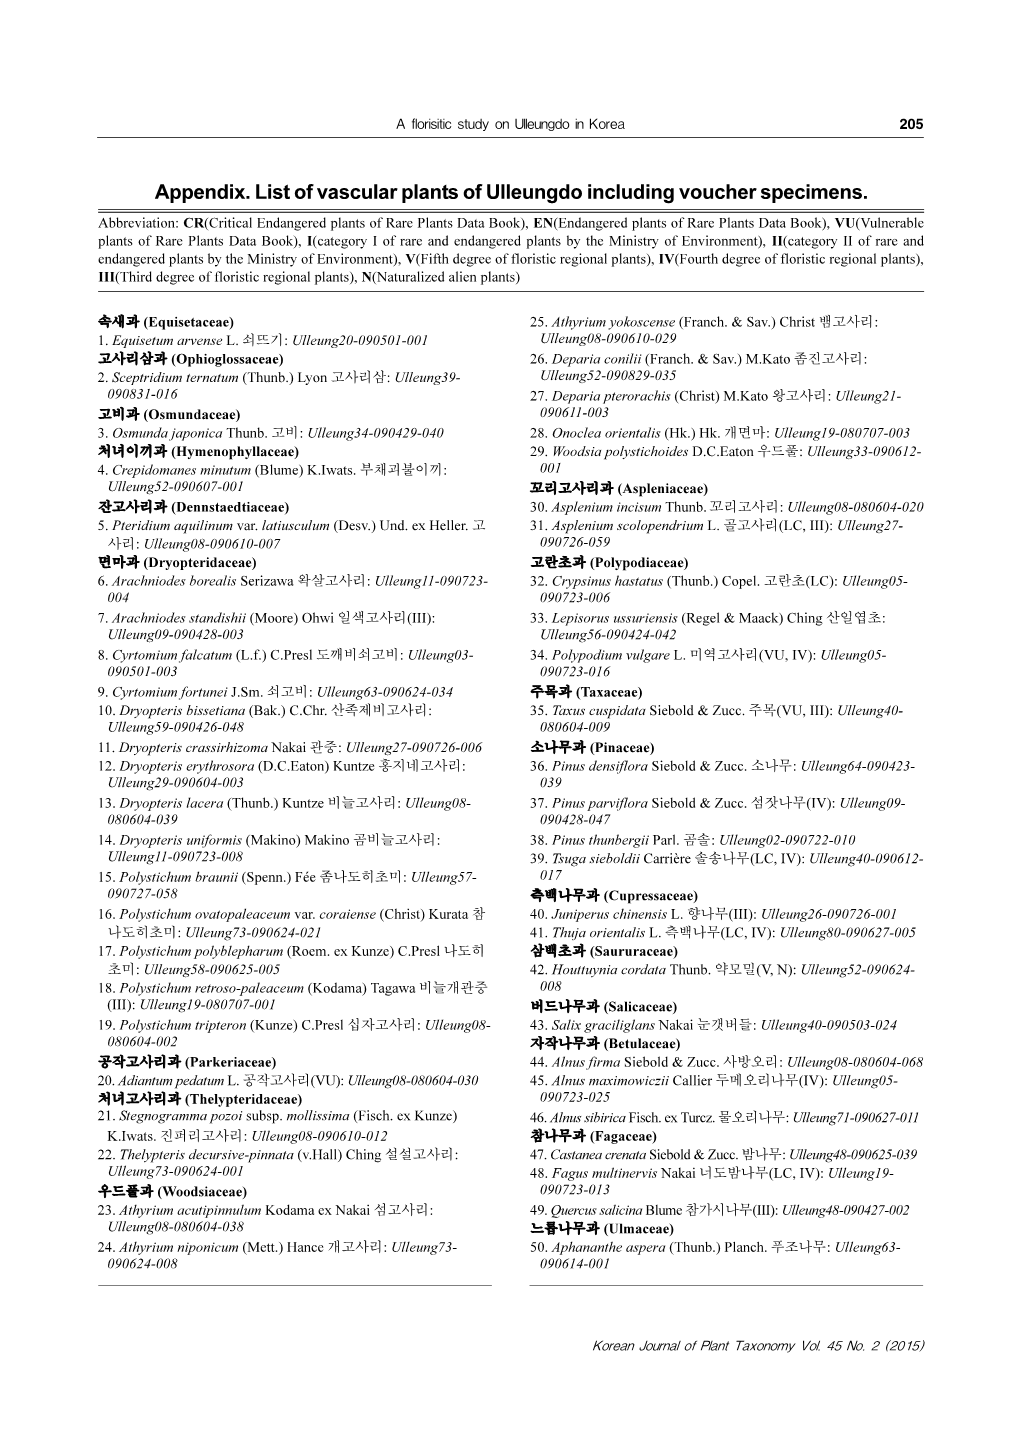 Appendix. List of Vascular Plants of Ulleungdo Including Voucher Specimens